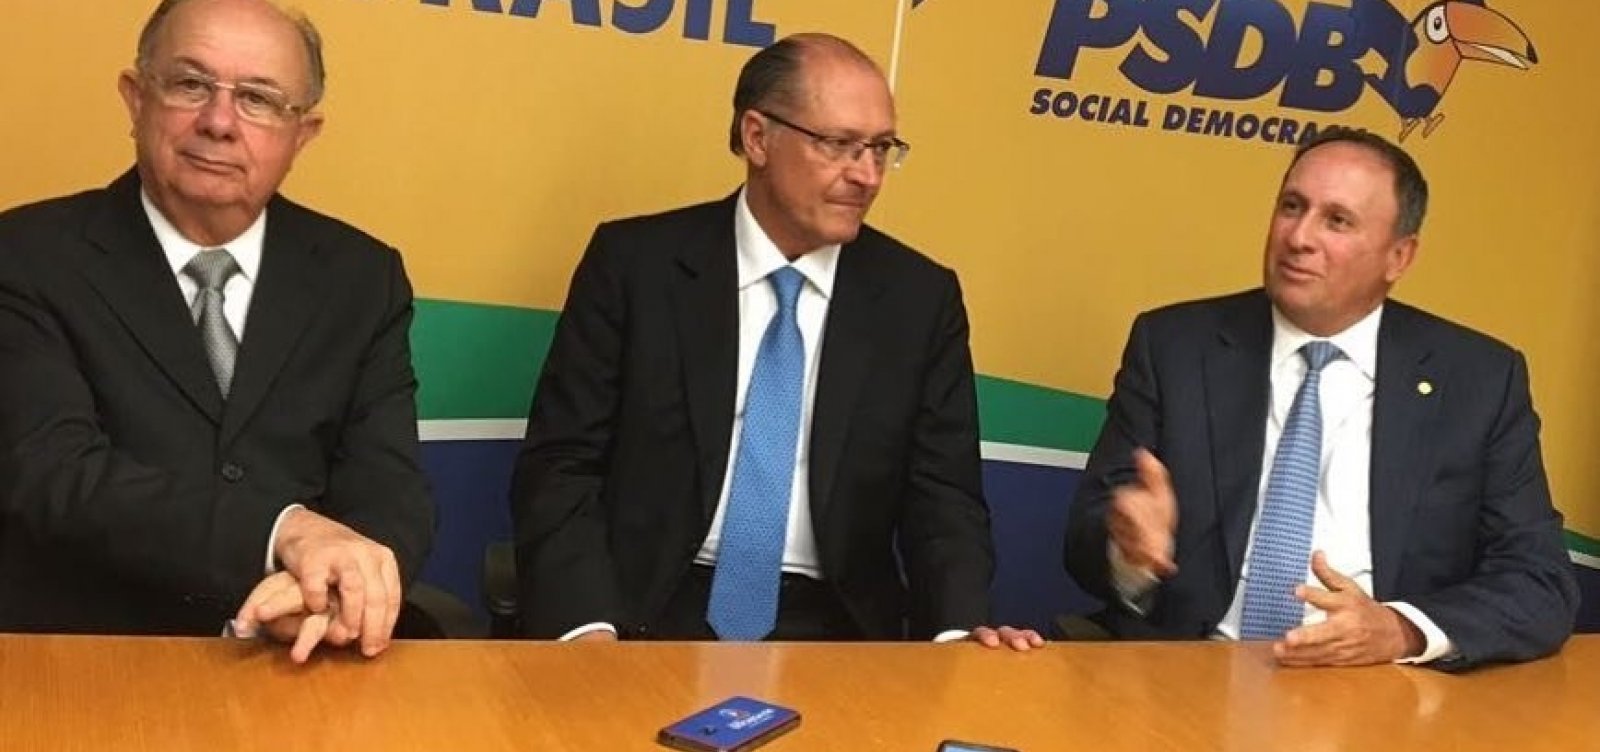 José Ronaldo vai a São Paulo para confirmar apoio a Alckmin na disputa presidencial